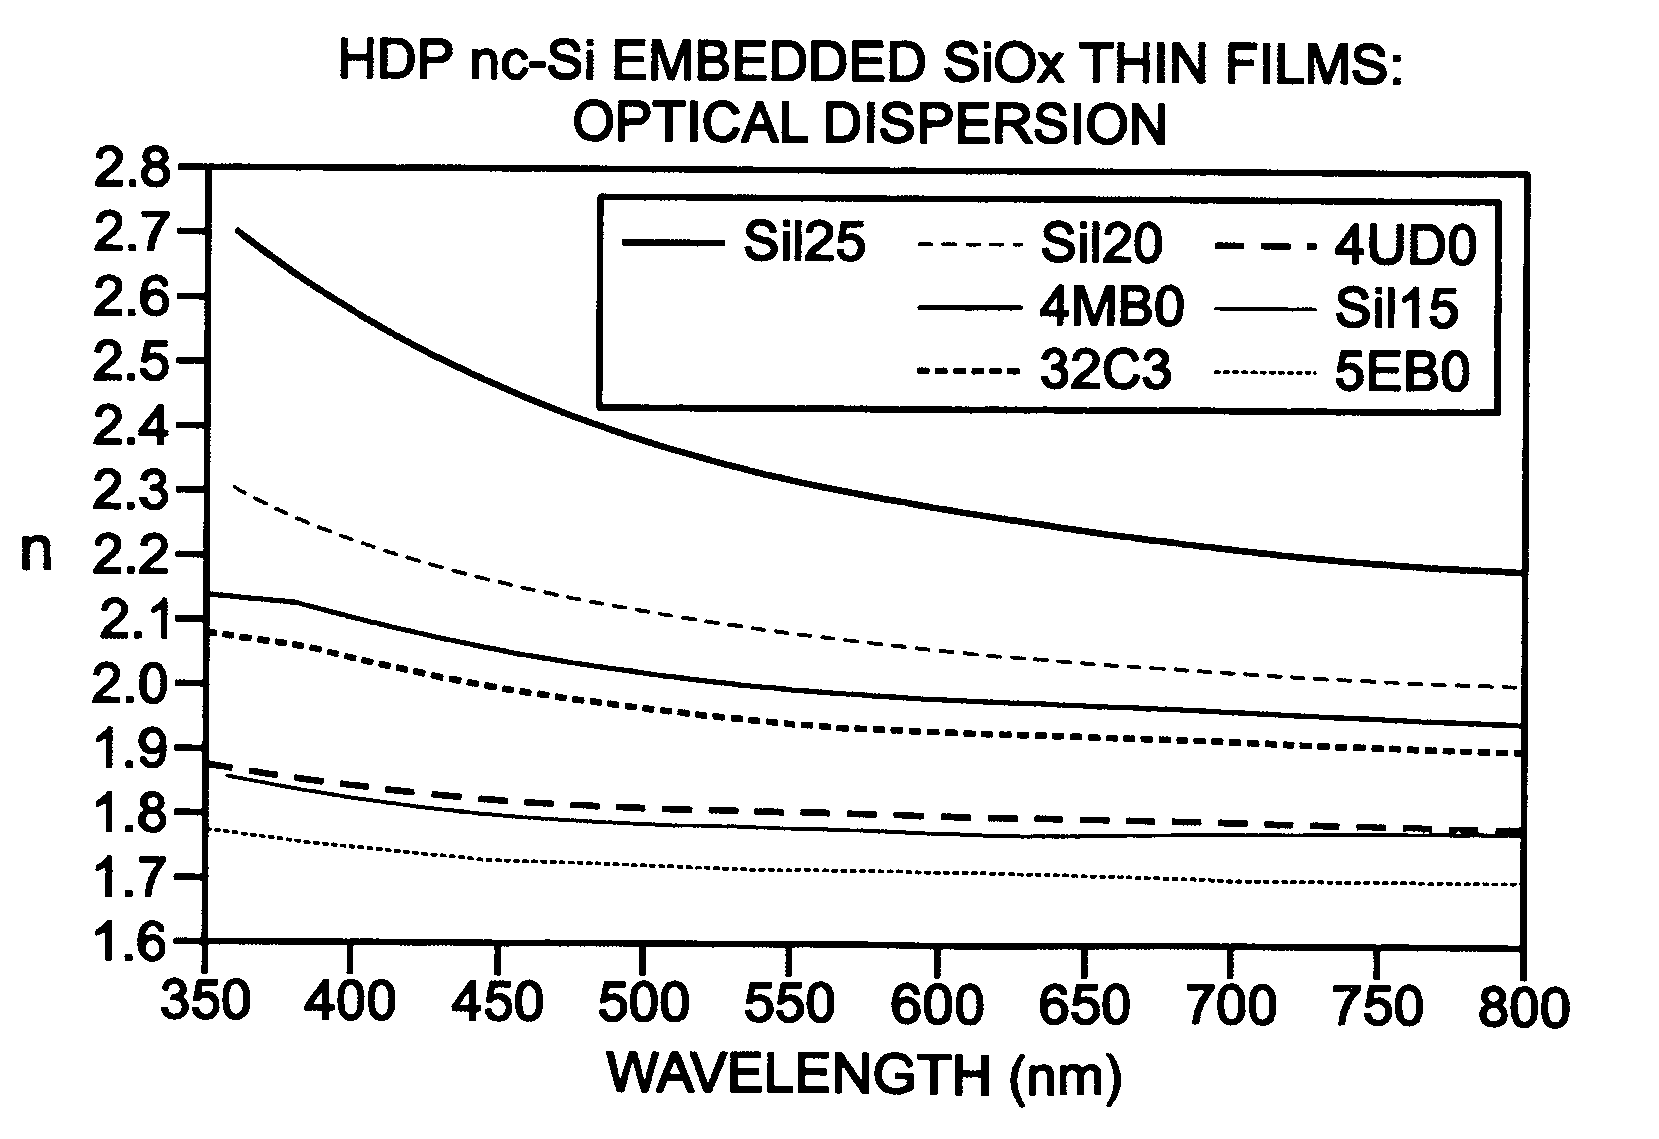 High density plasma non-stoichiometric SiOxNy films